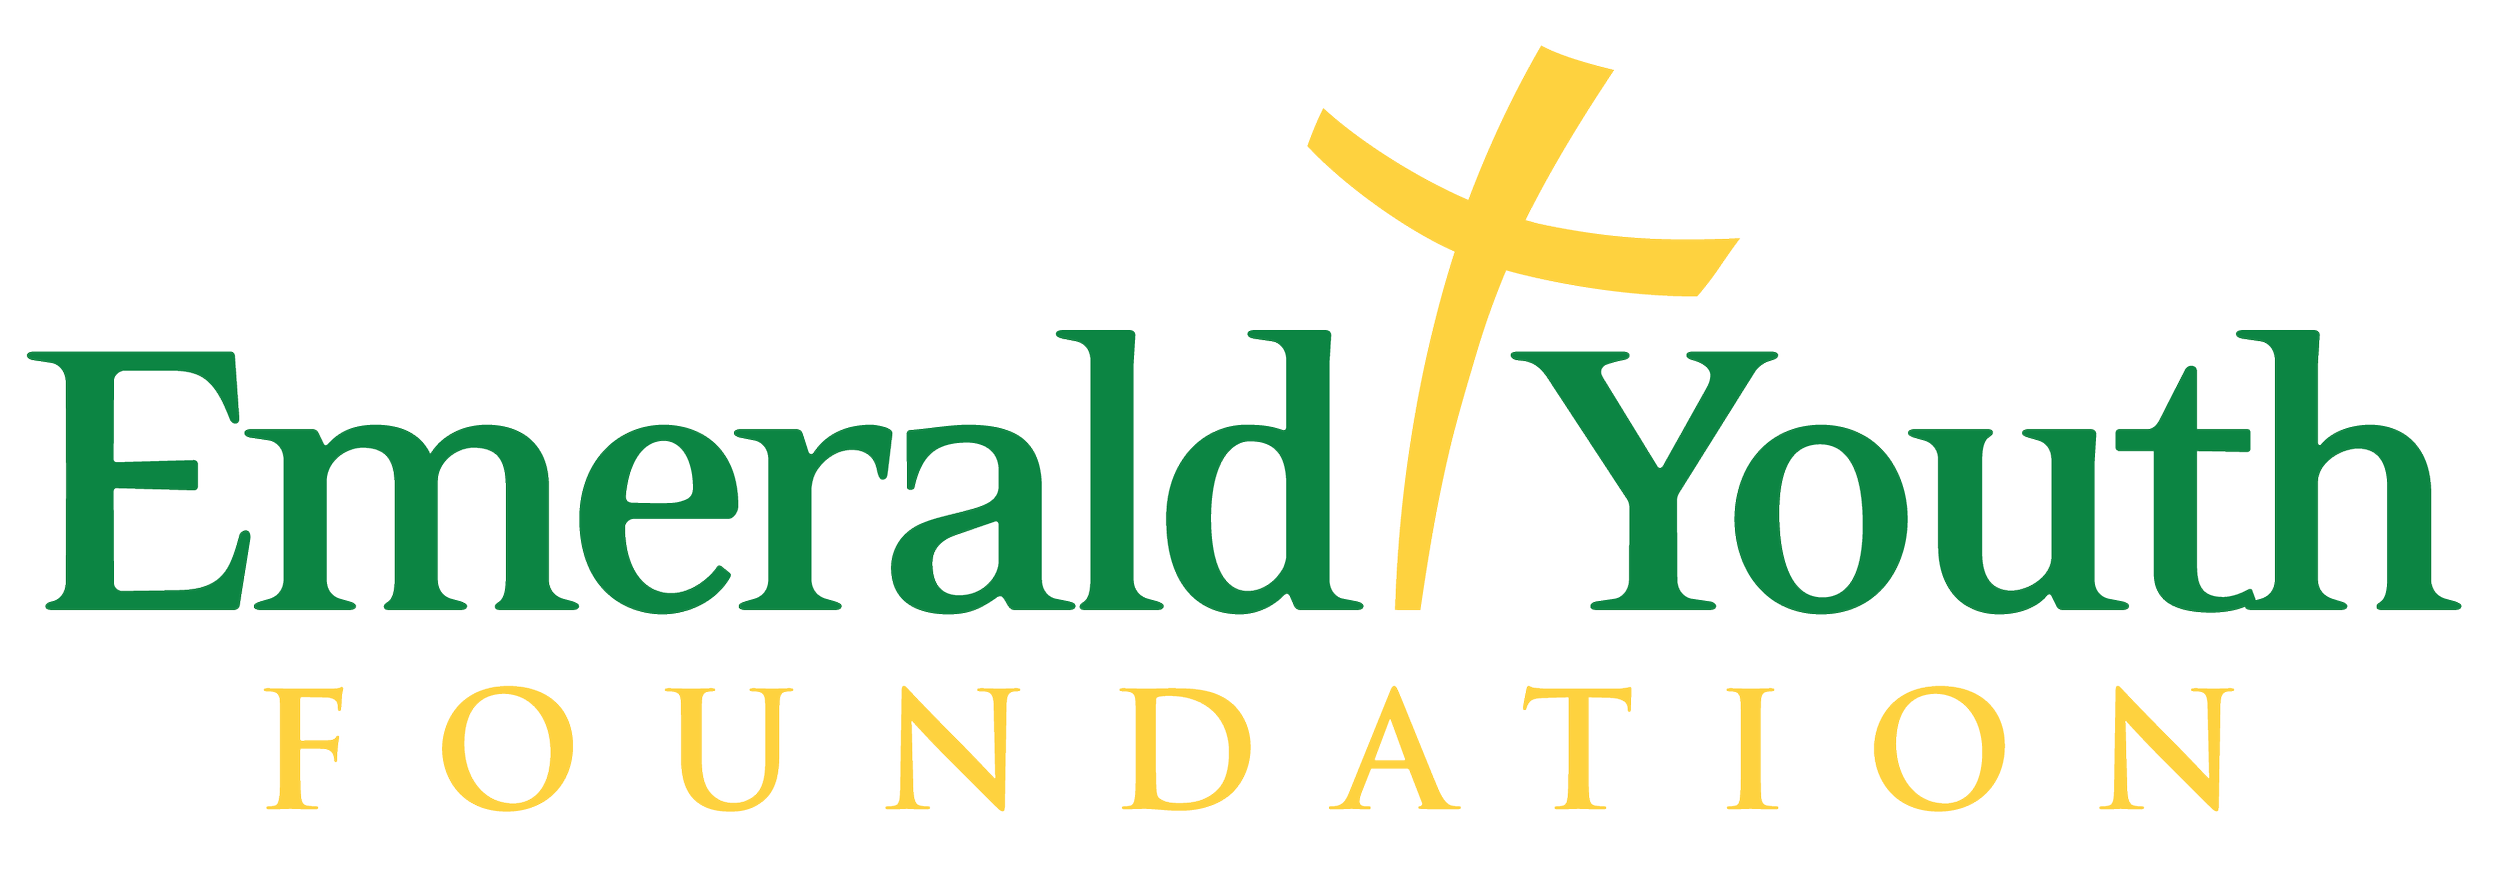 Emerald Youth Foundation